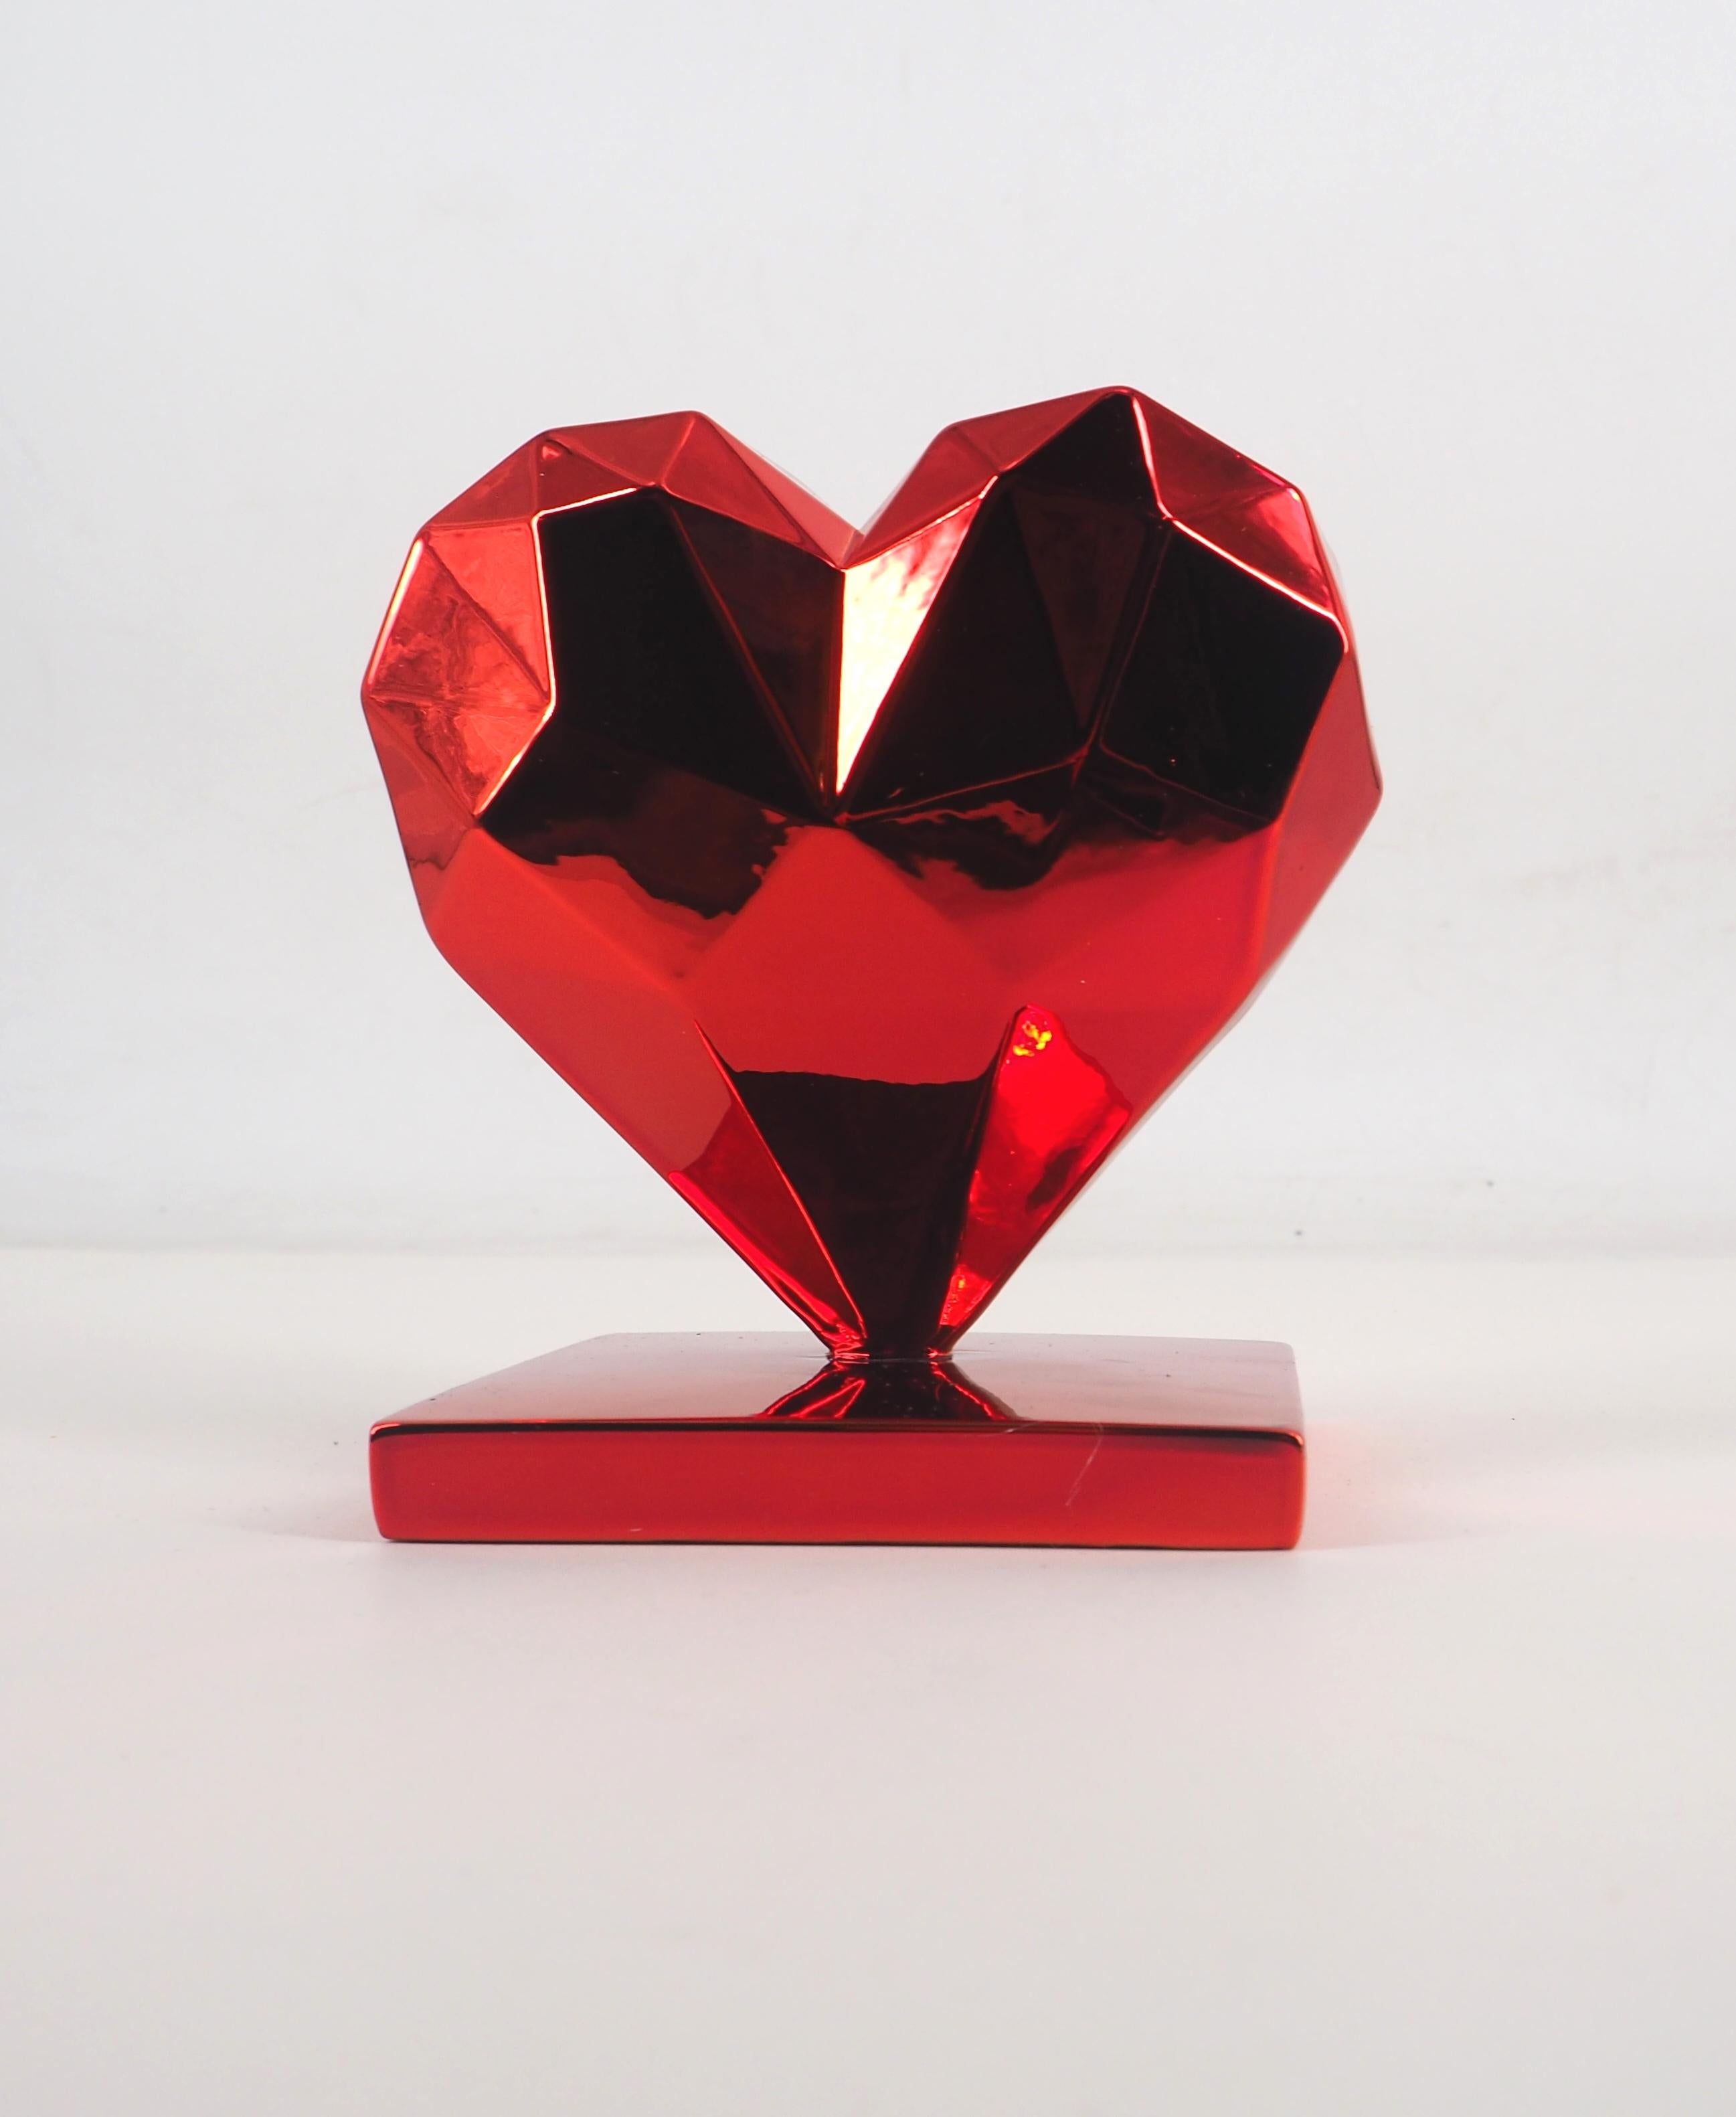 Figurative Sculpture Richard Orlinski - Heart Spirit (édition rouge) - Sculpture dans sa boîte d'origine avec certificat d'artiste